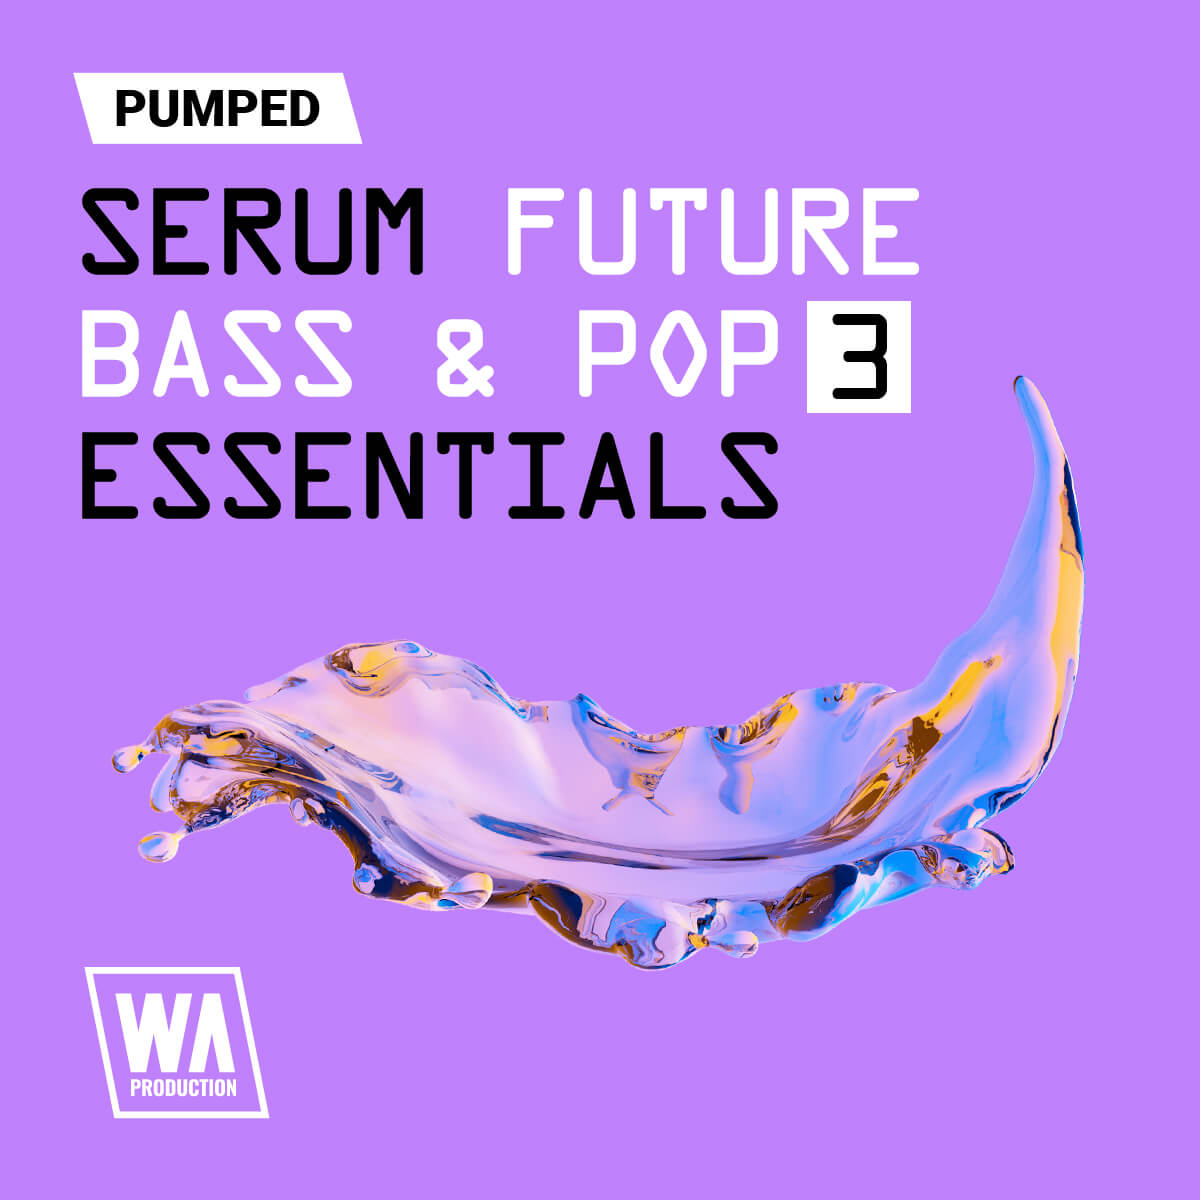 W.A Production Pumped: Serum Future Bass & Pop Essentials 3